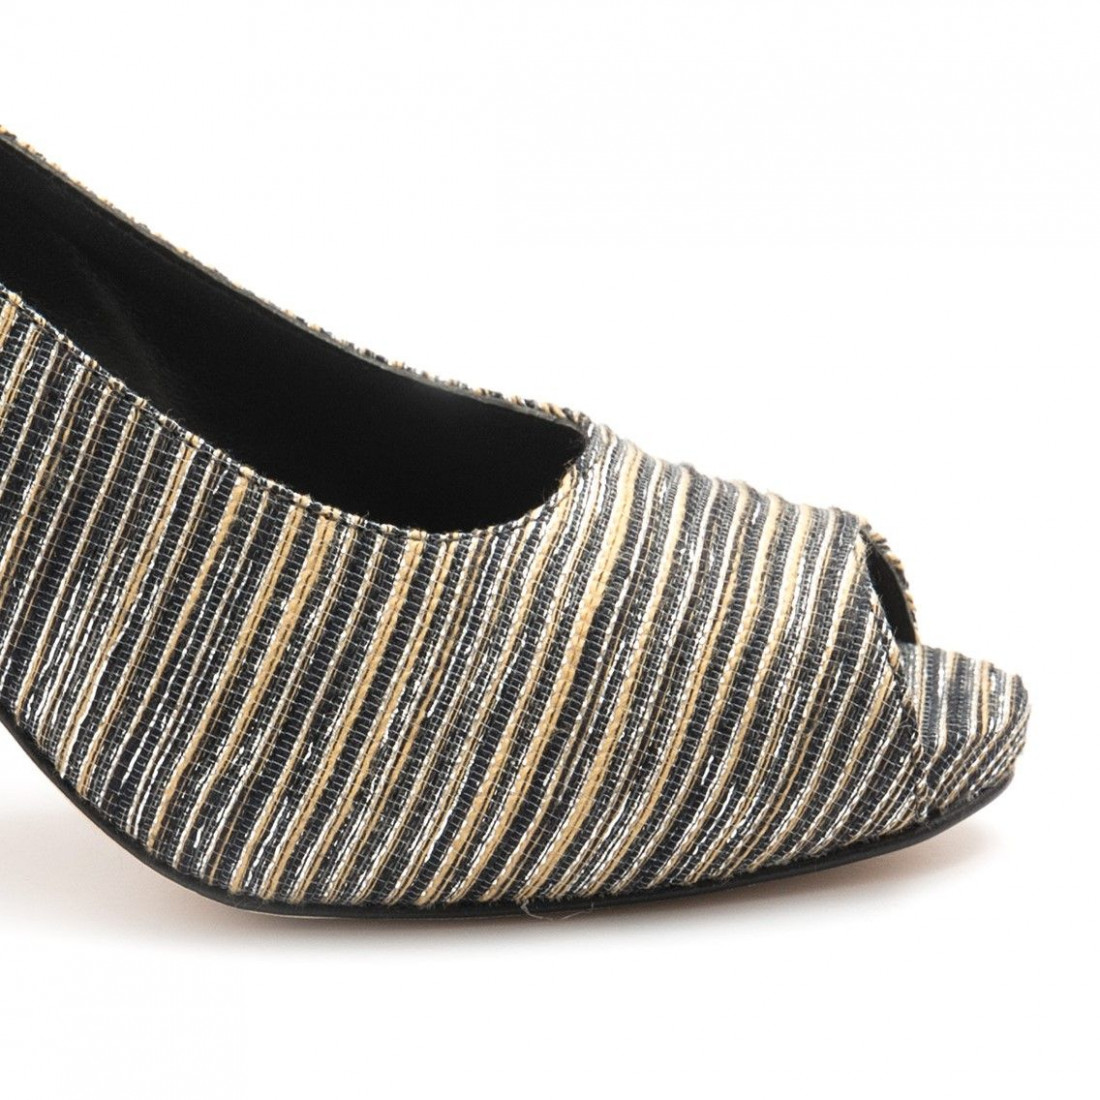 Multicolor fabric Calpierre heeled sandals